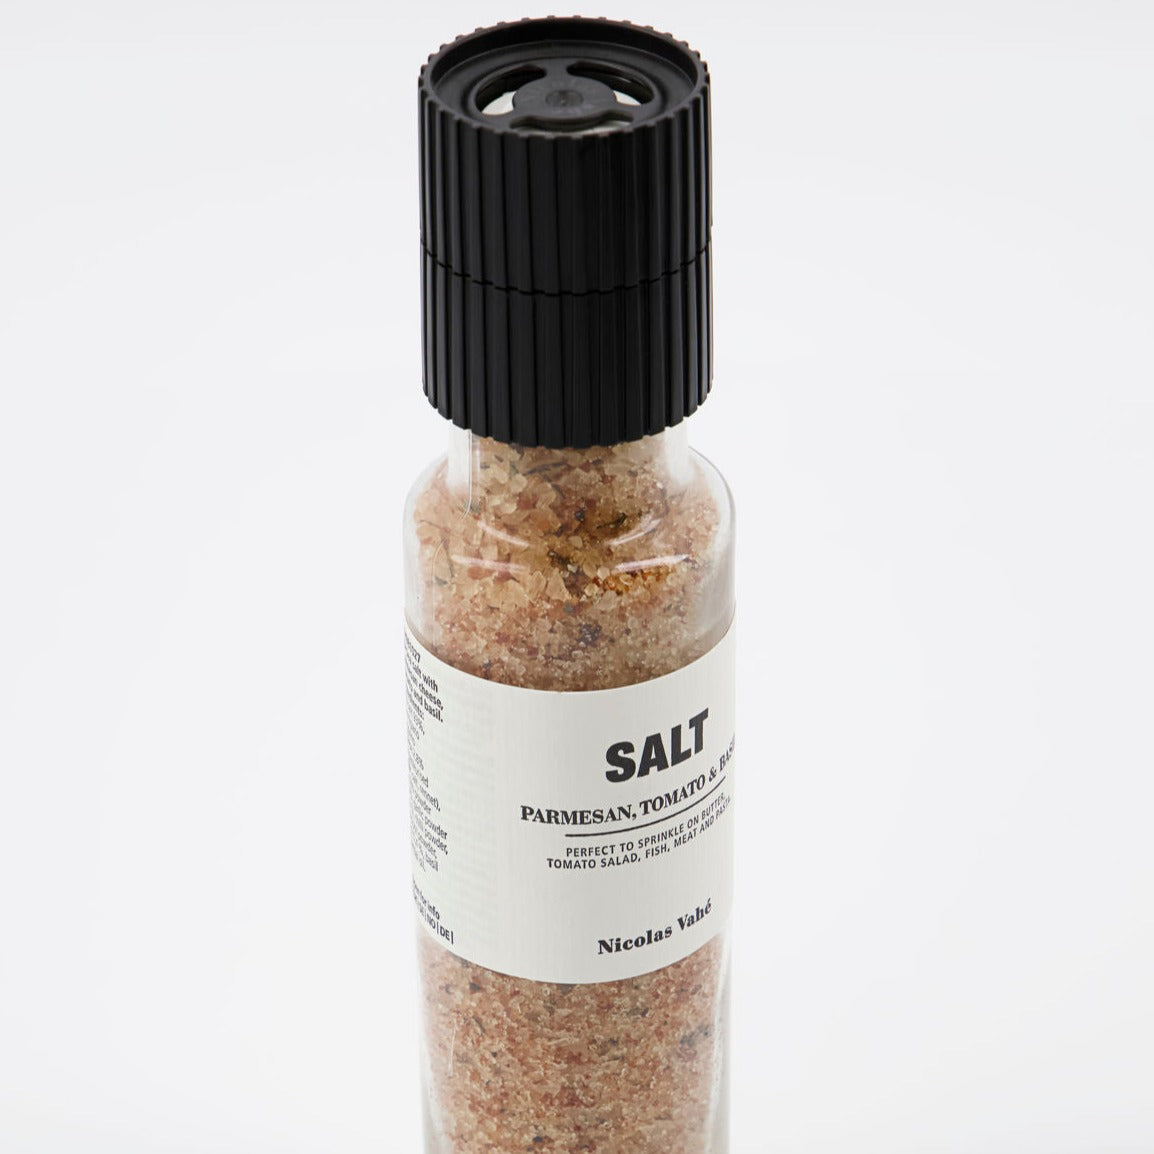 SALT - PARMESAN, TOMATO & BASIL